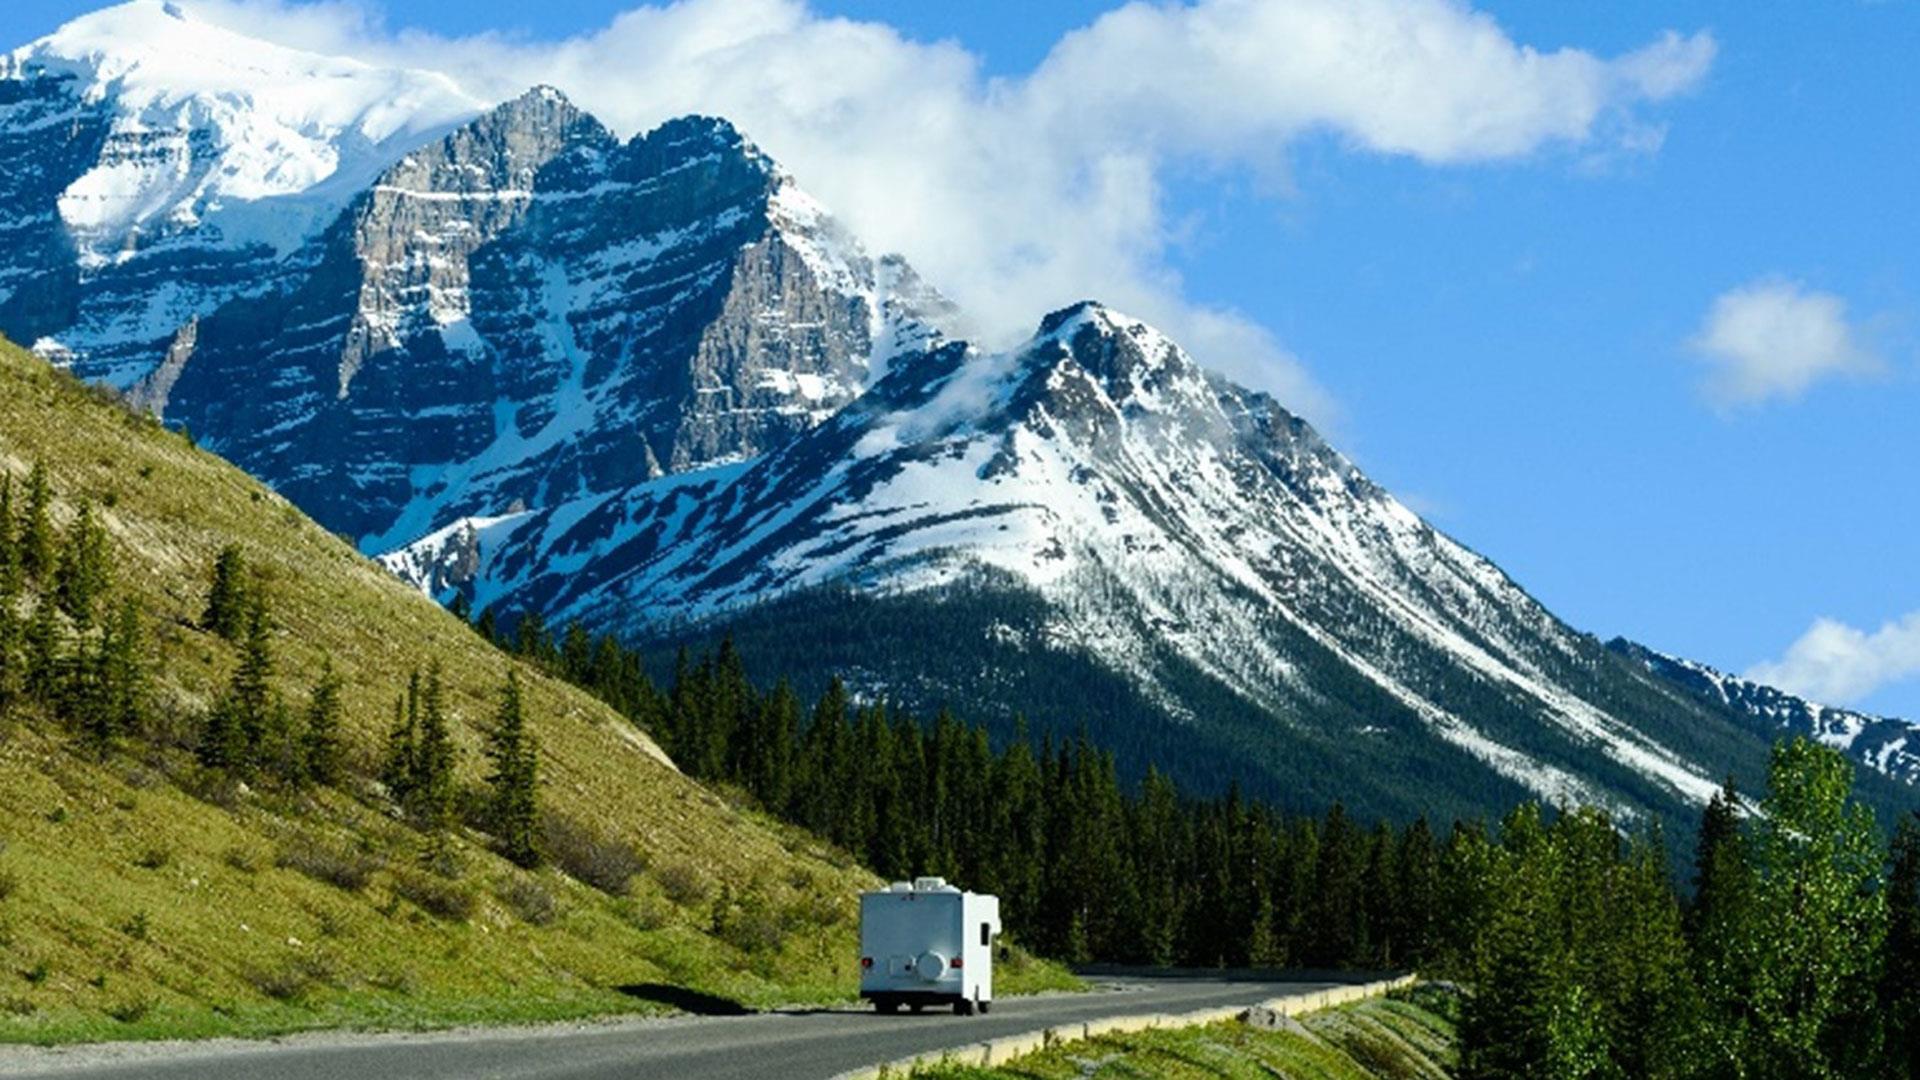 Campervan driving through mountains